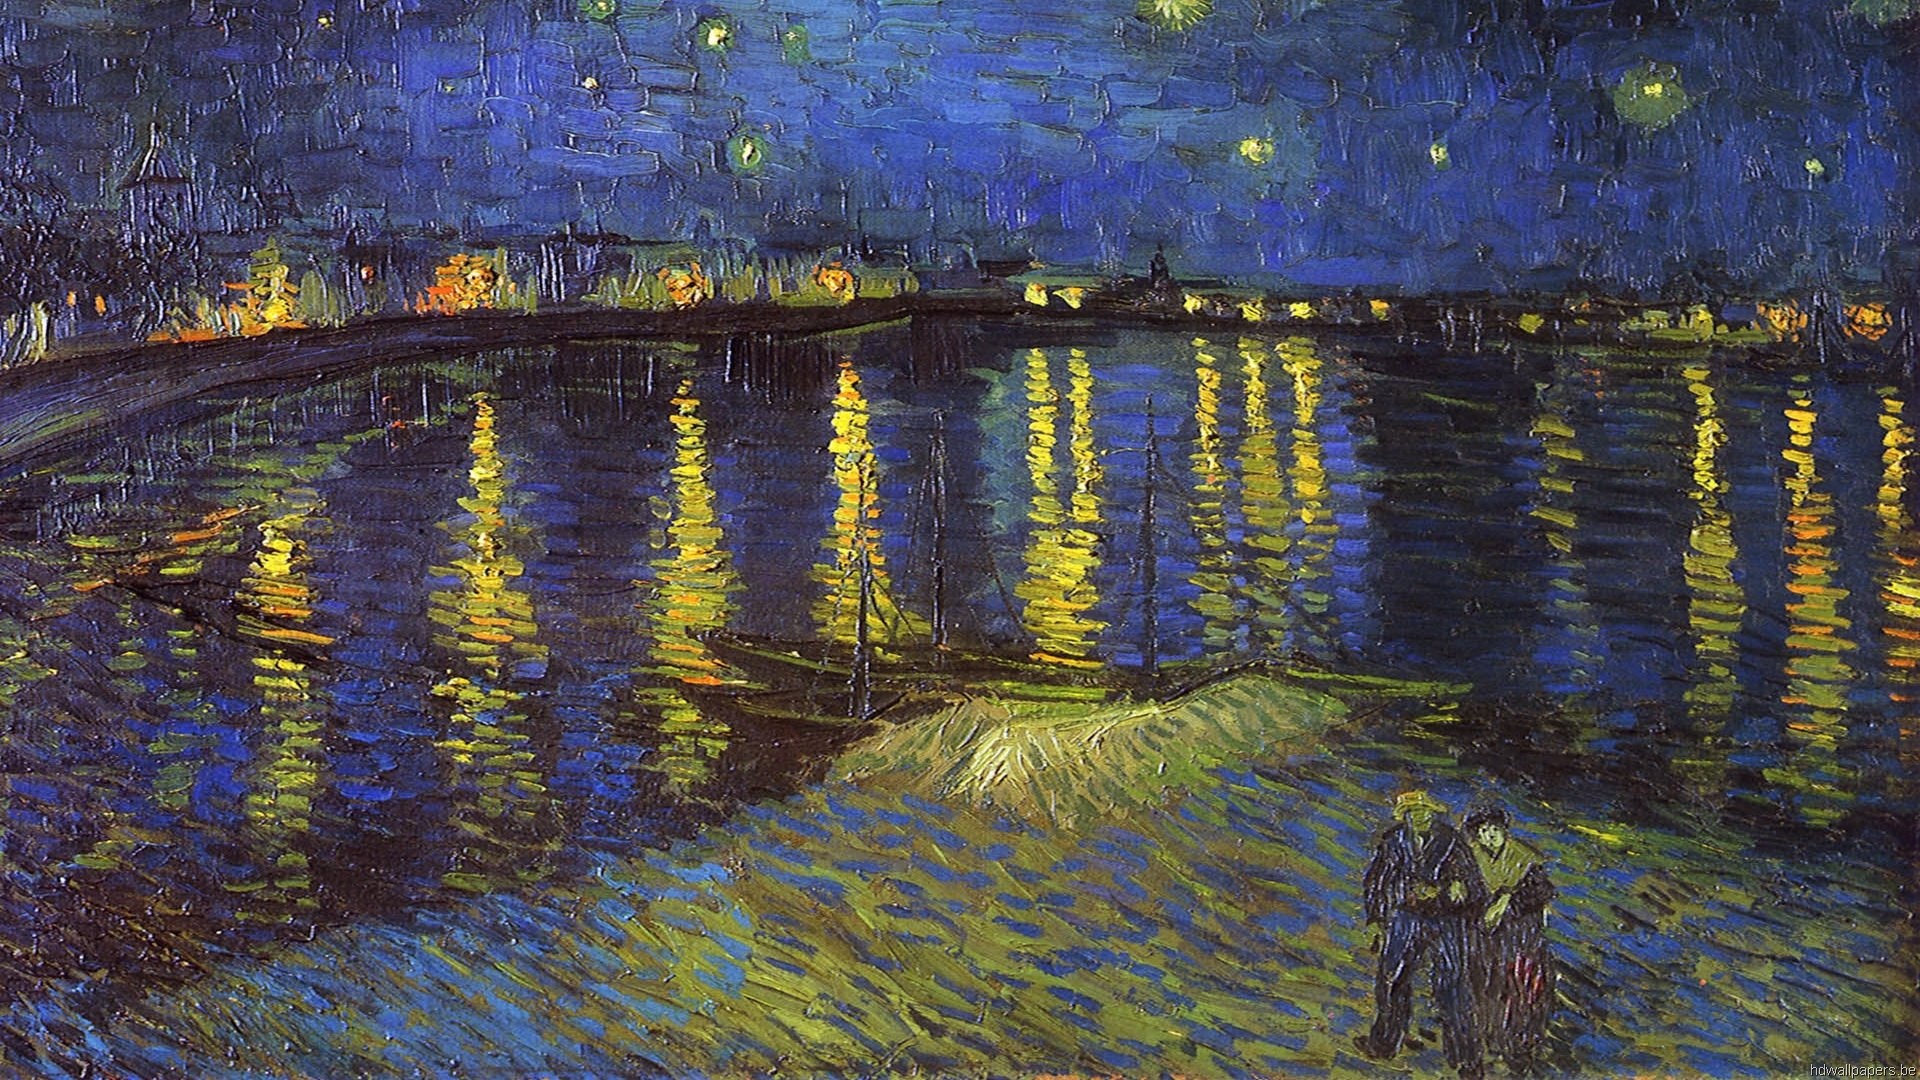 HD wallpaper, Desktop 1080P Vincent Van Gogh Wallpaper Image, Van Gogh Hd Wallpaper, Vibrant Colors, Stunning Artwork, 1920X1080 Full Hd Desktop, Impressionist Style